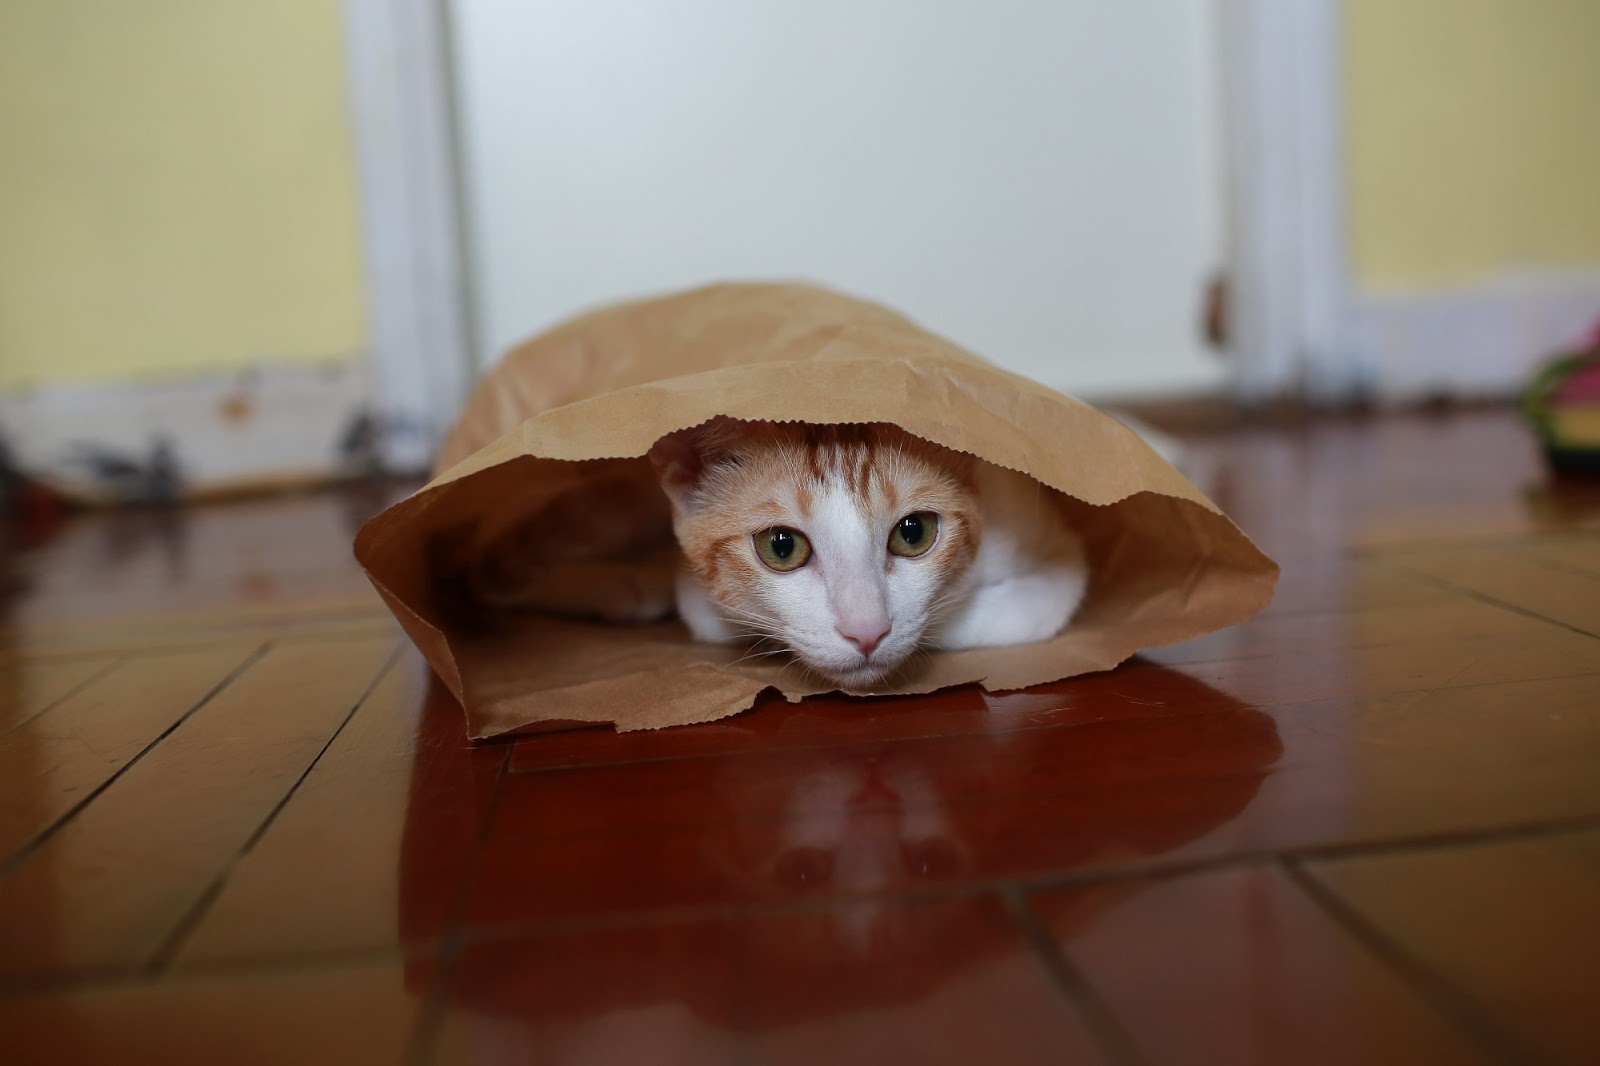 Cat hide and seek in a bag